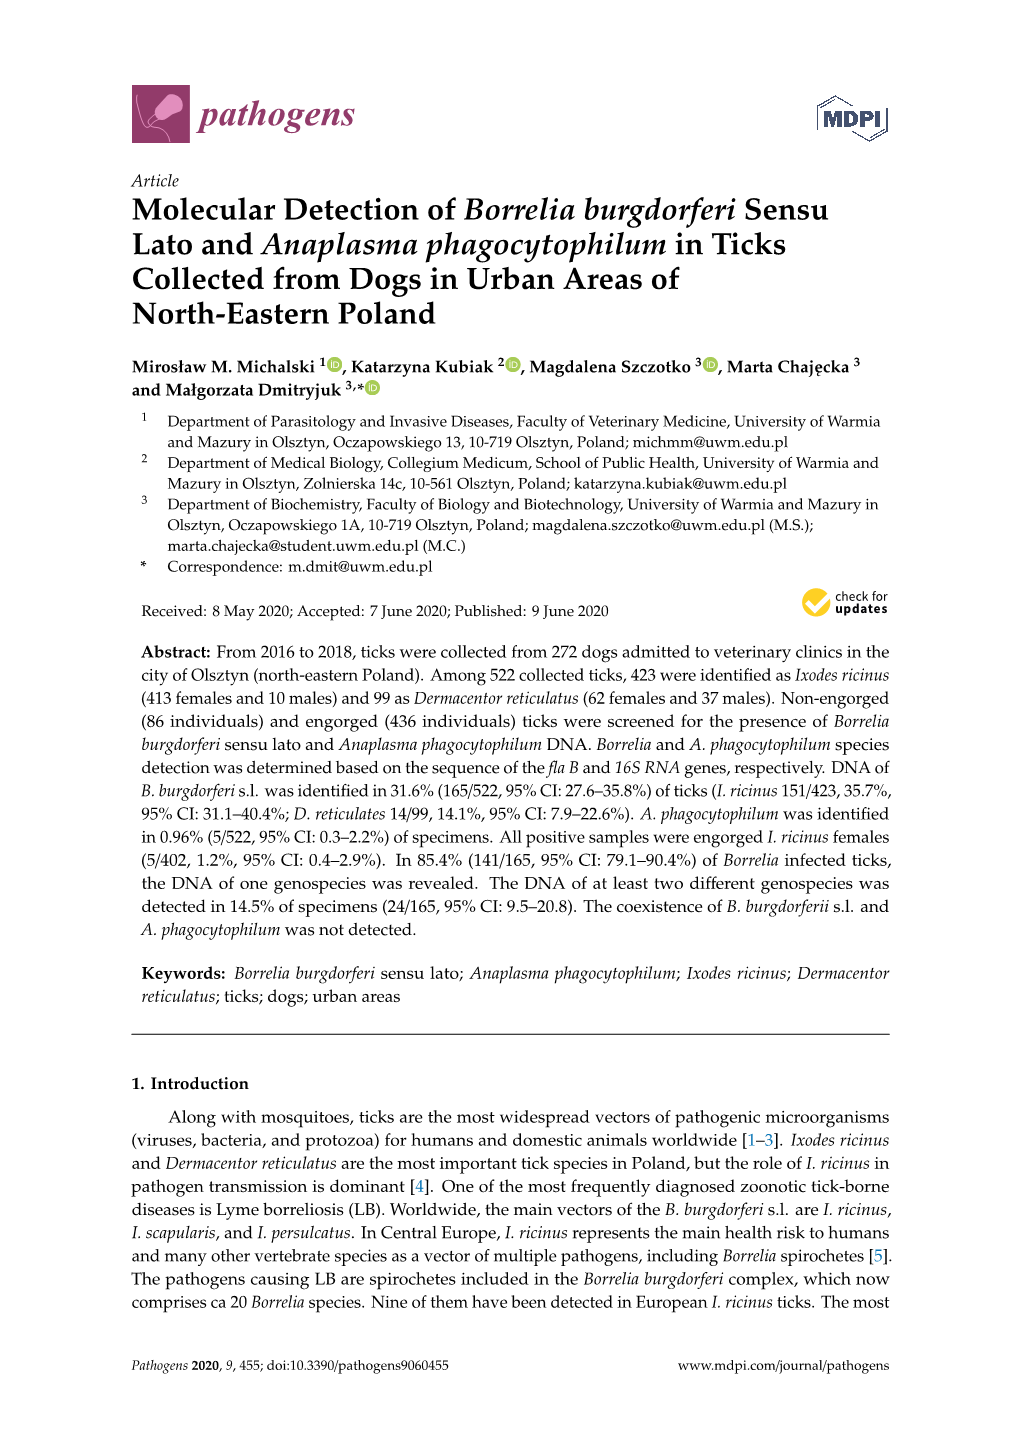 Molecular Detection of Borrelia Burgdorferi Sensu Lato and Anaplasma Phagocytophilum in Ticks Collected from Dogs in Urban Areas of North-Eastern Poland